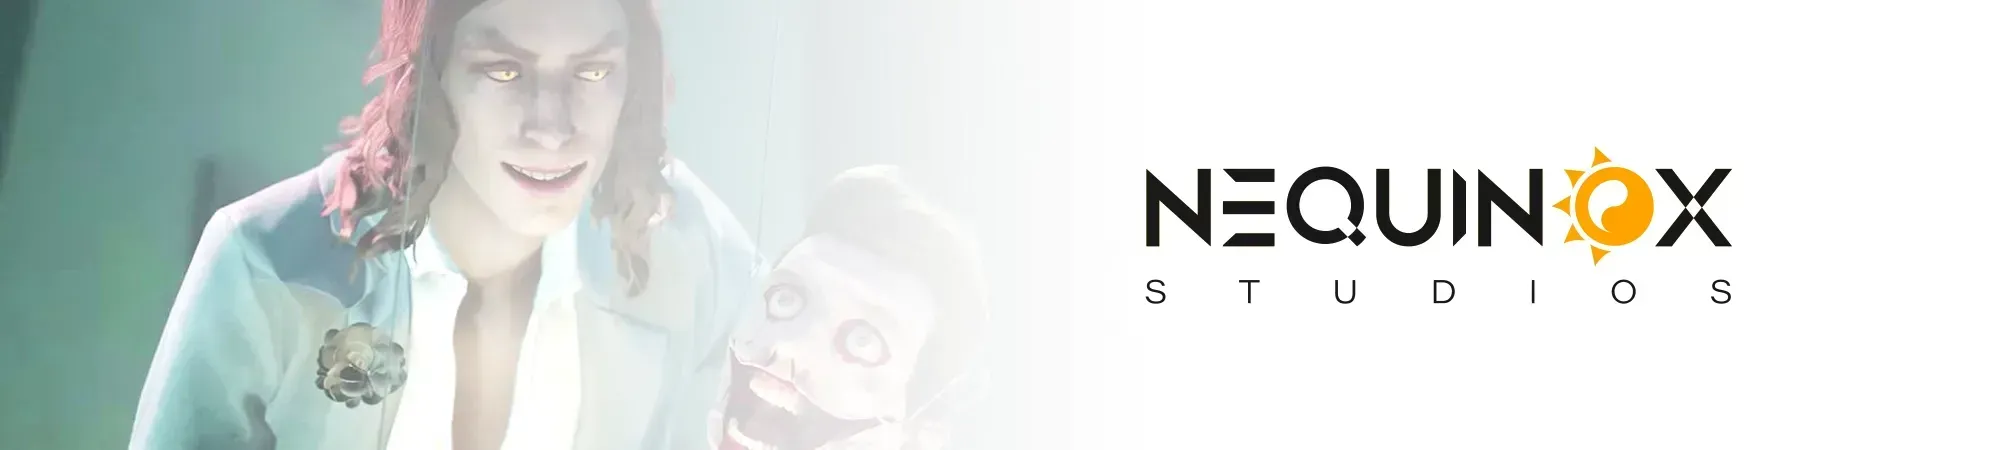 Nequinox Studios Banner